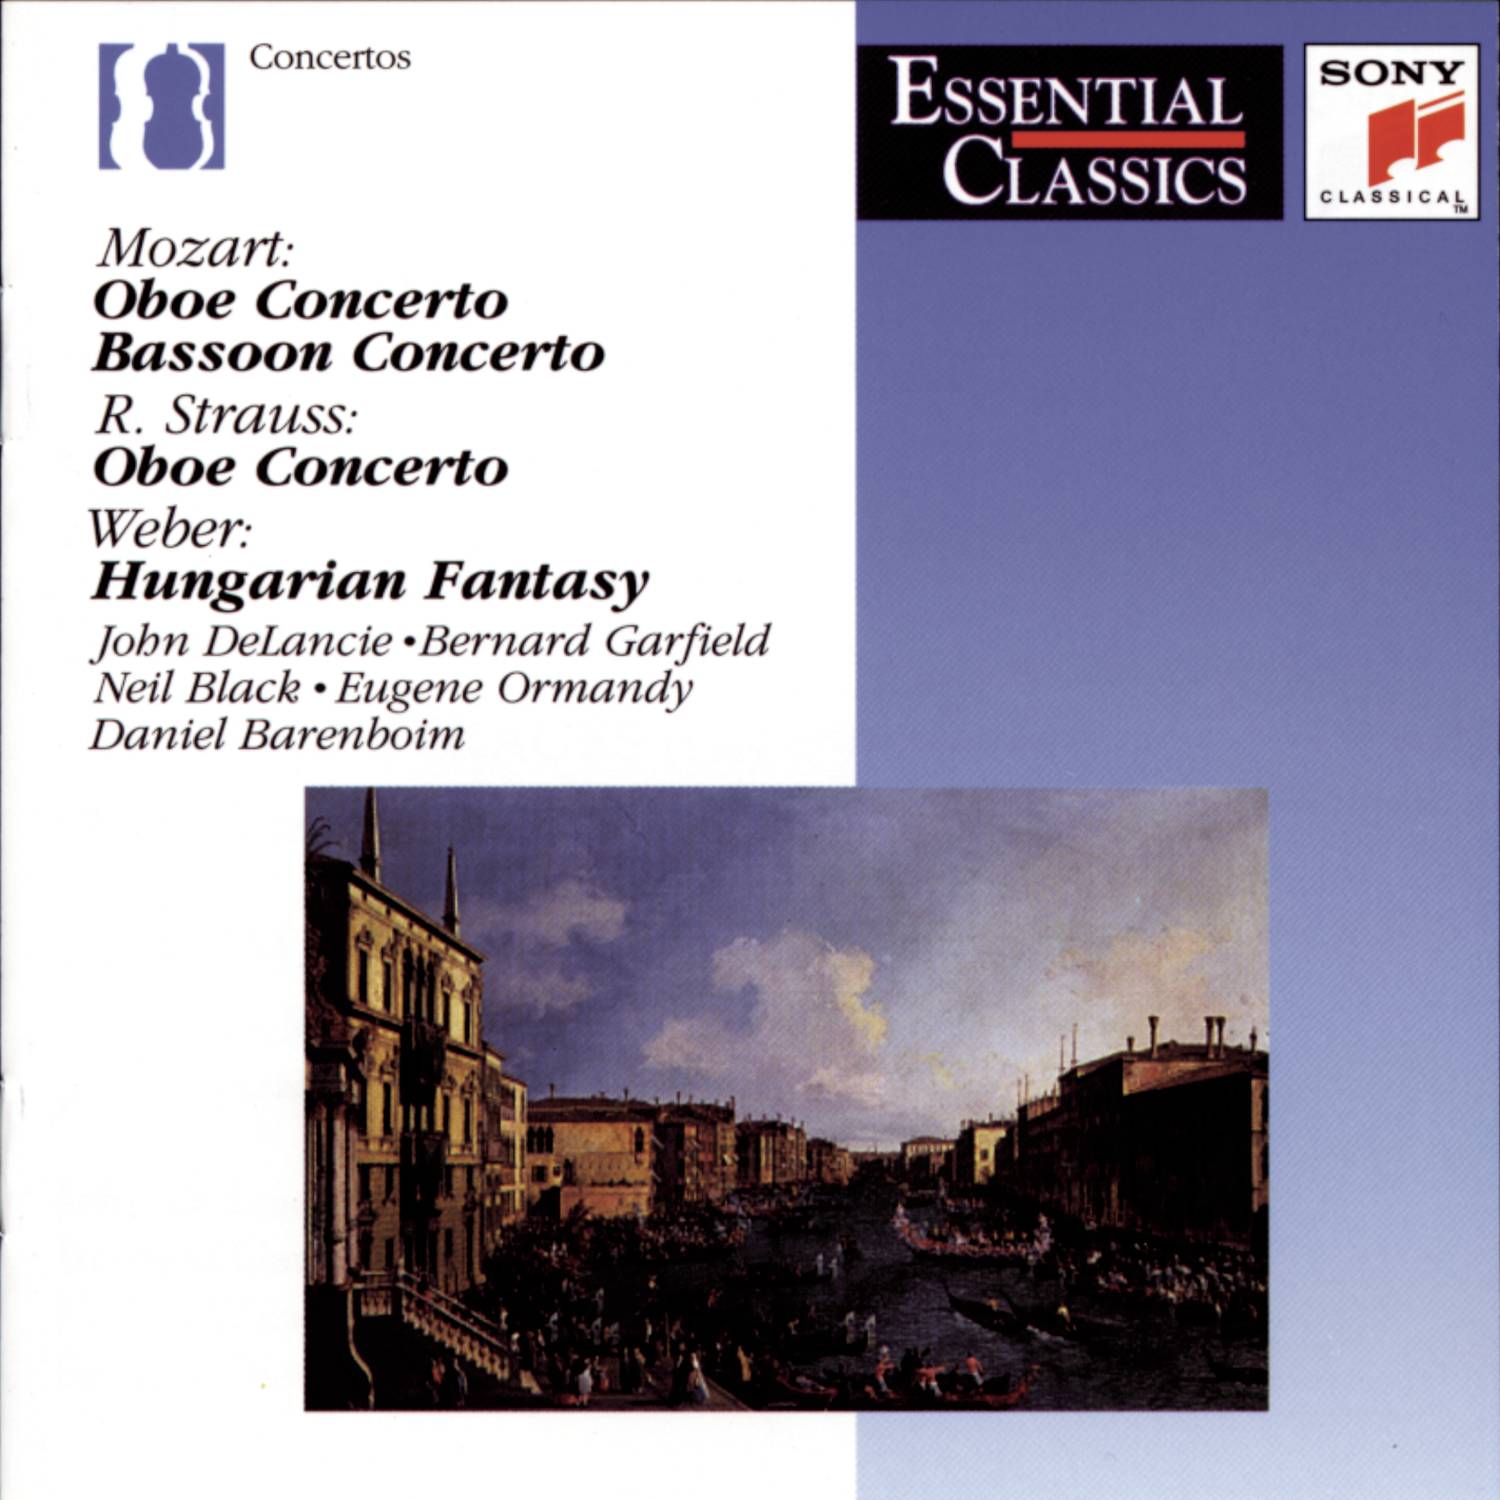 Concerto for Oboe and Small Orchestra: Allegro - Vivace